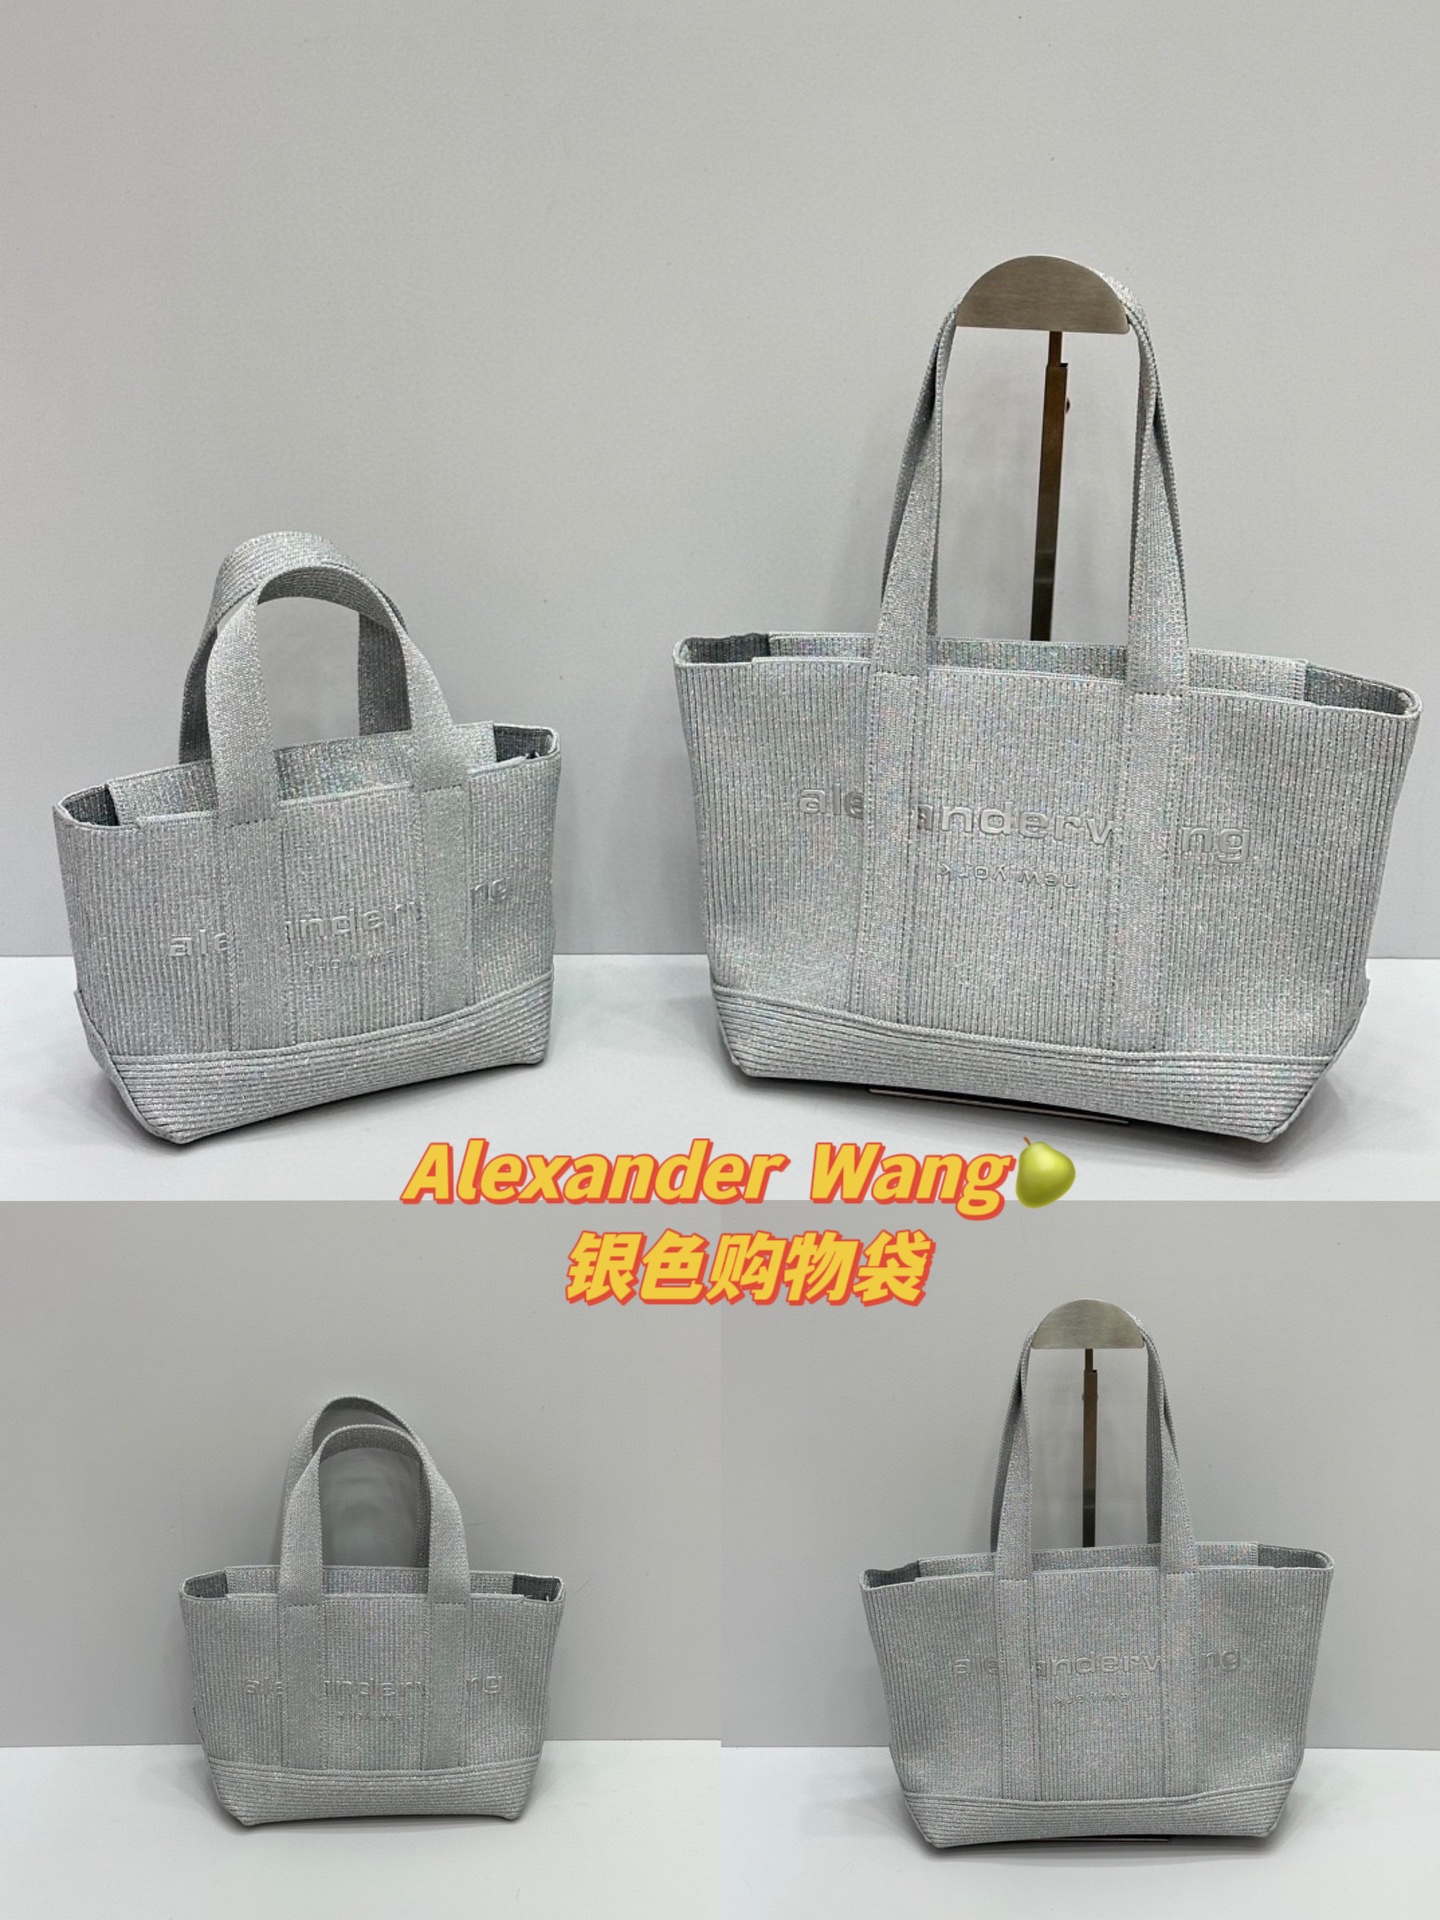 Alexander Wang حقيبة حقيبة يد حقيبة توتا الفضة .